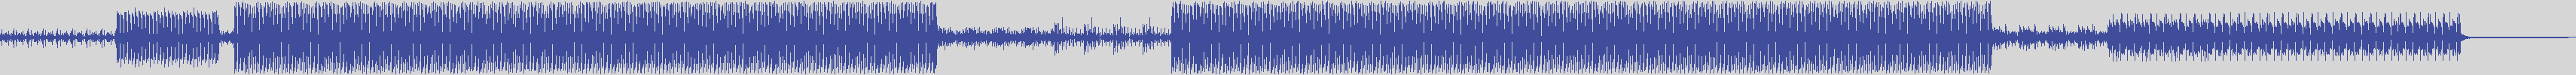 nf_boyz_records [NFY057] Alvar King - My Link [Original Mix] audio wave form